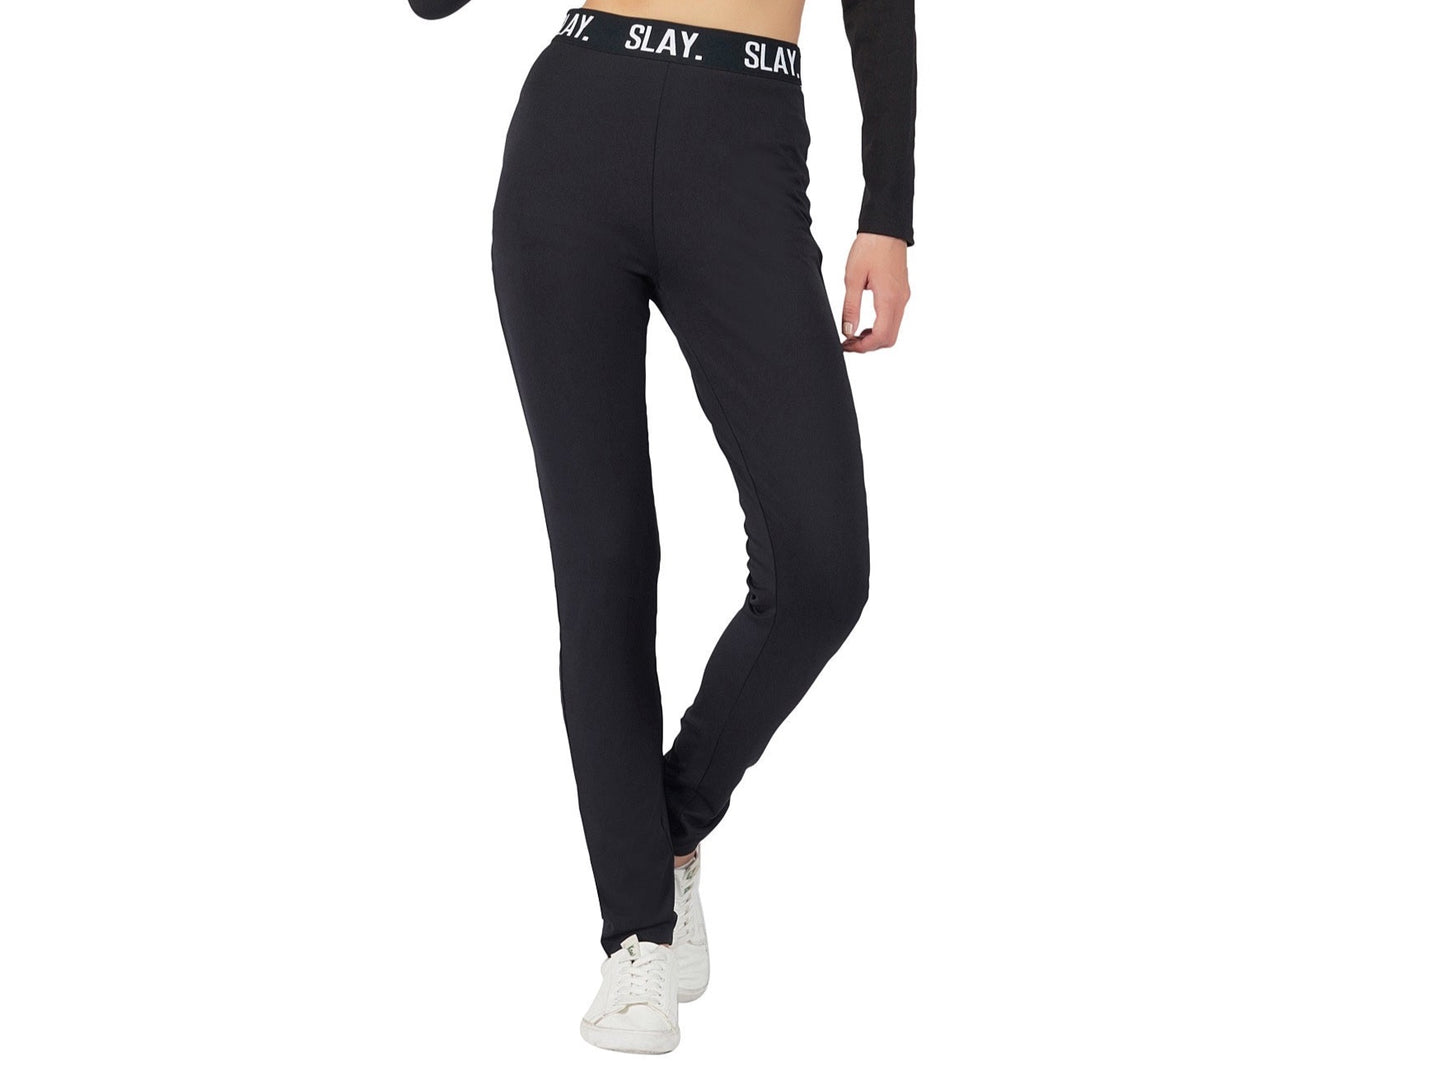 SLAY. Women's Black Activewear Jogger Pants